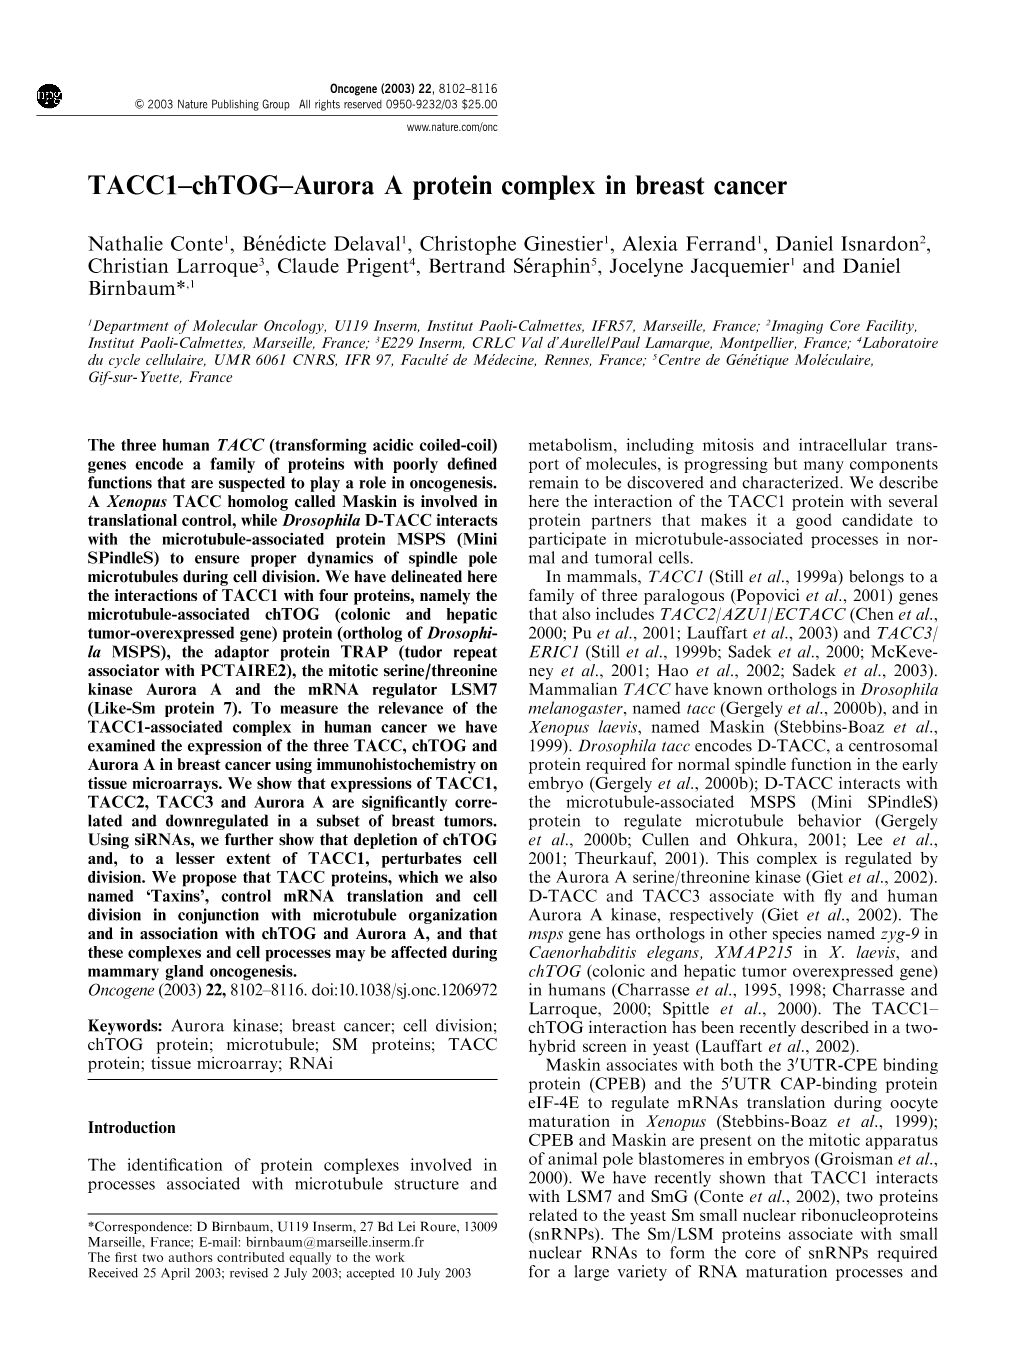 TACC1–Chtog–Aurora a Protein Complex in Breast Cancer